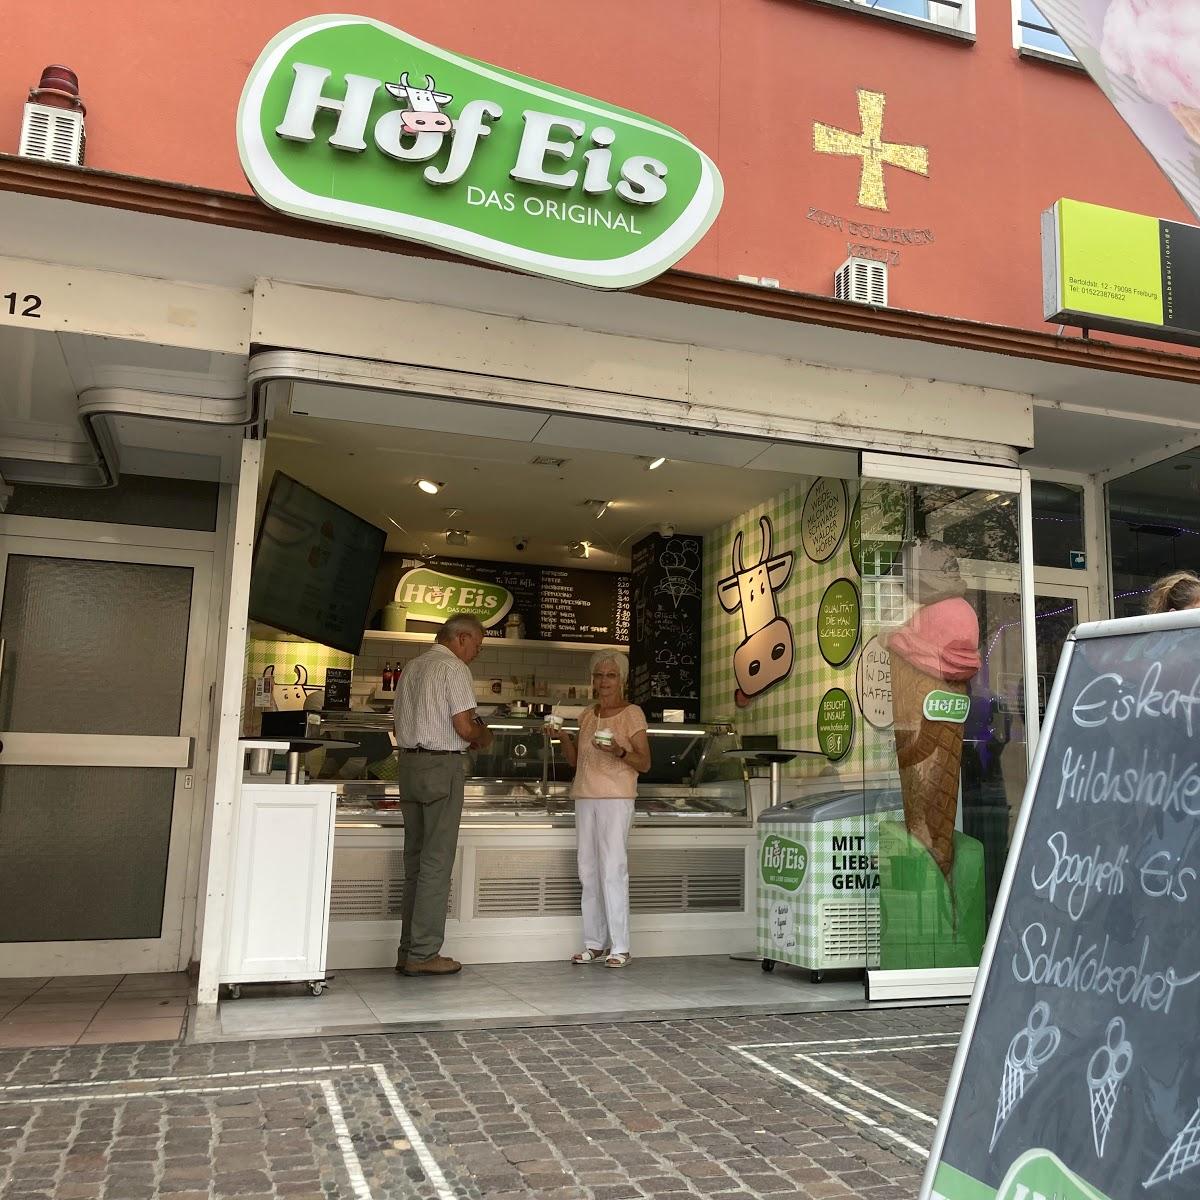 Restaurant "HofEis-Diele" in Freiburg im Breisgau